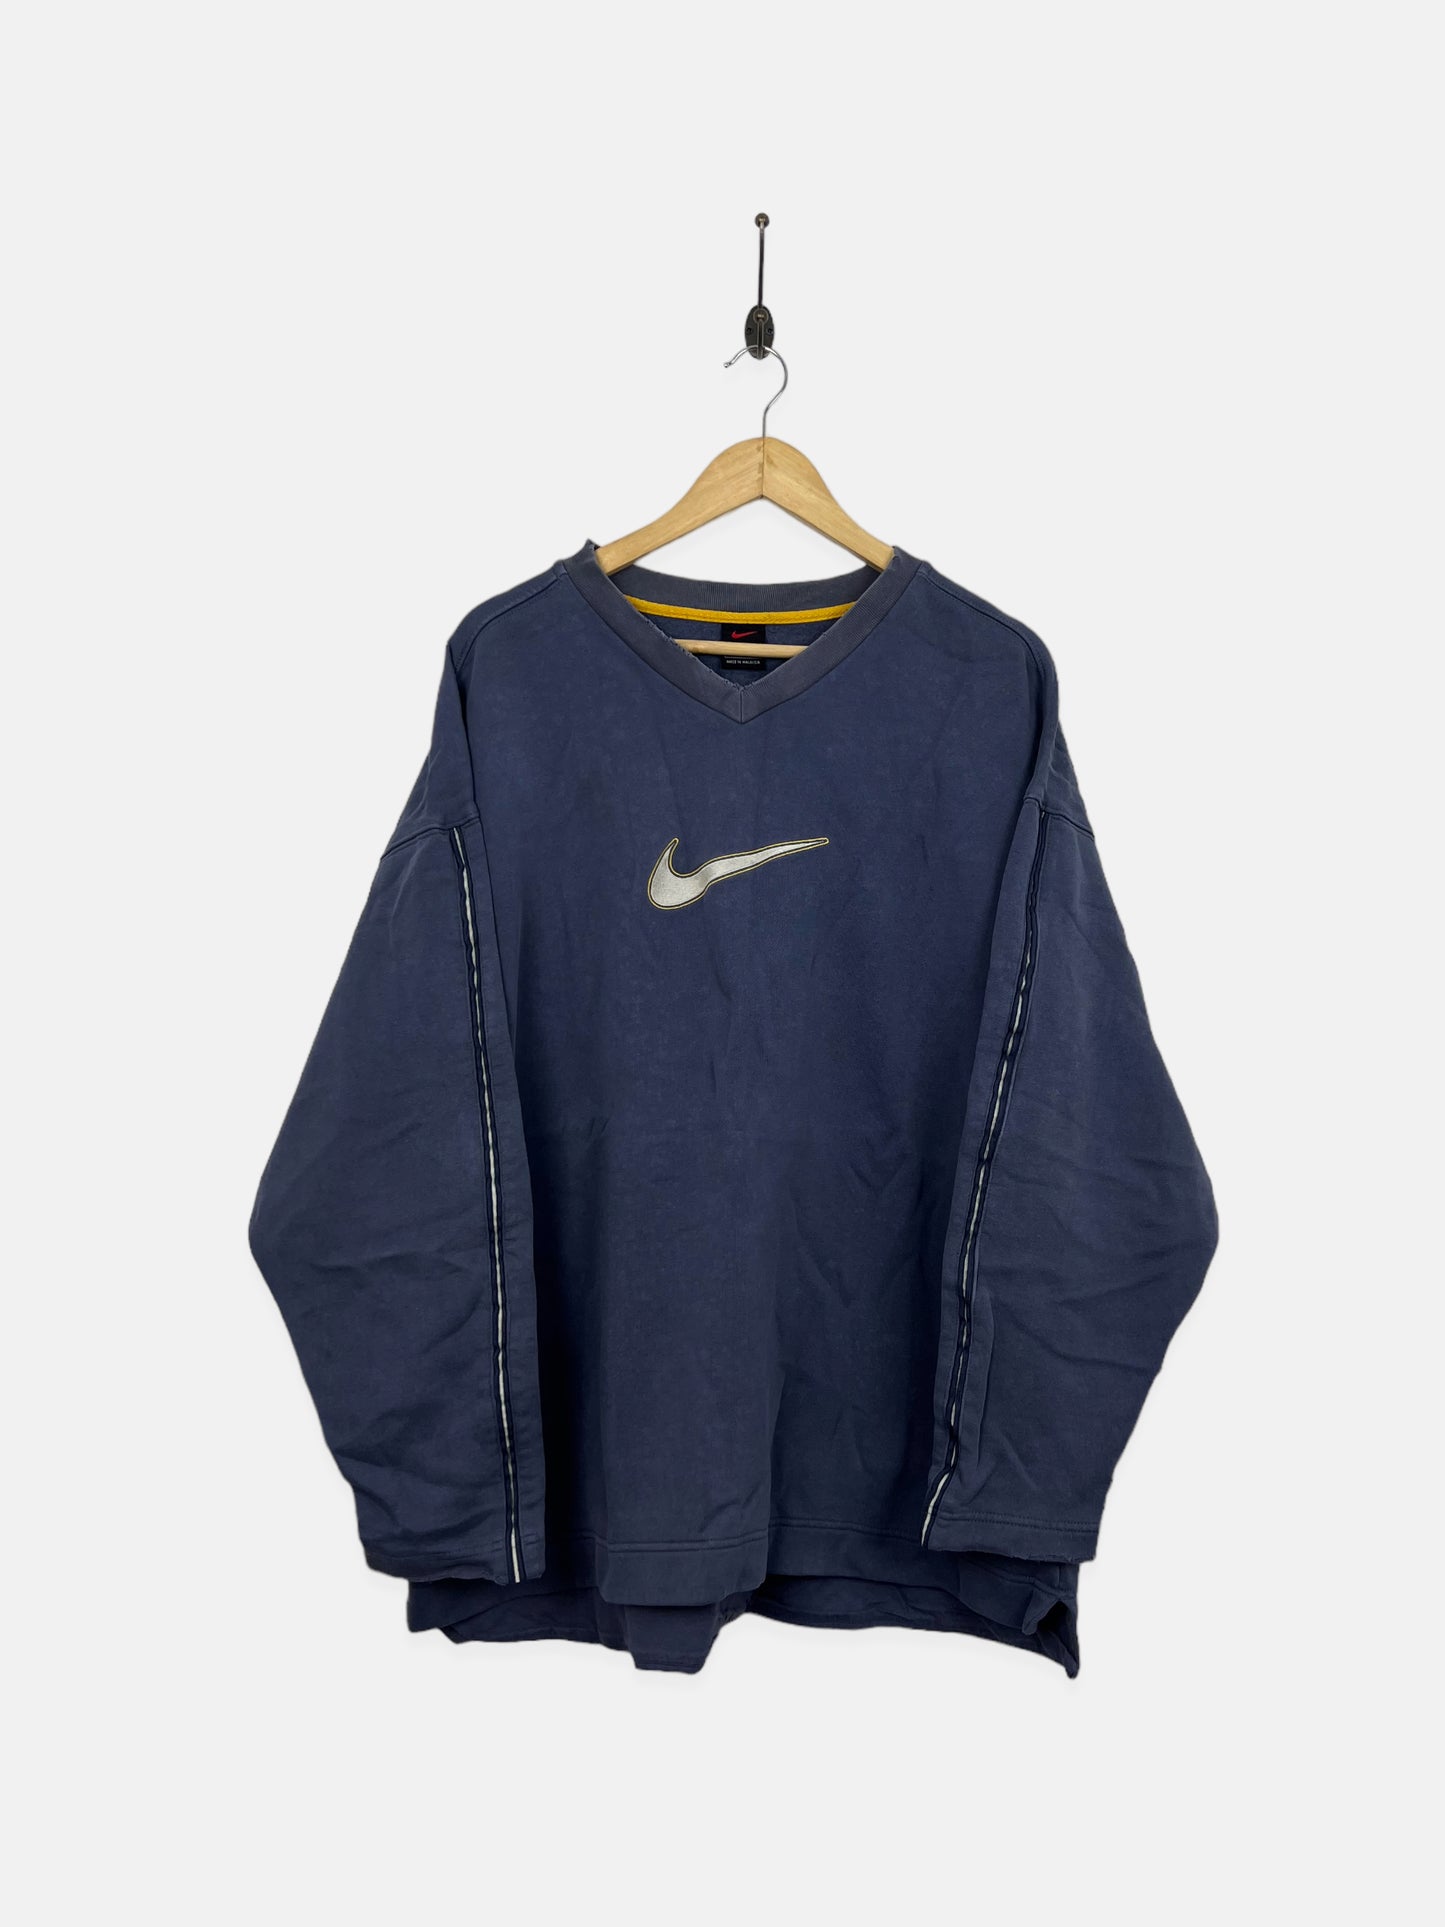 90's Nike Embroidered Vintage Sweatshirt Size XL-2XL